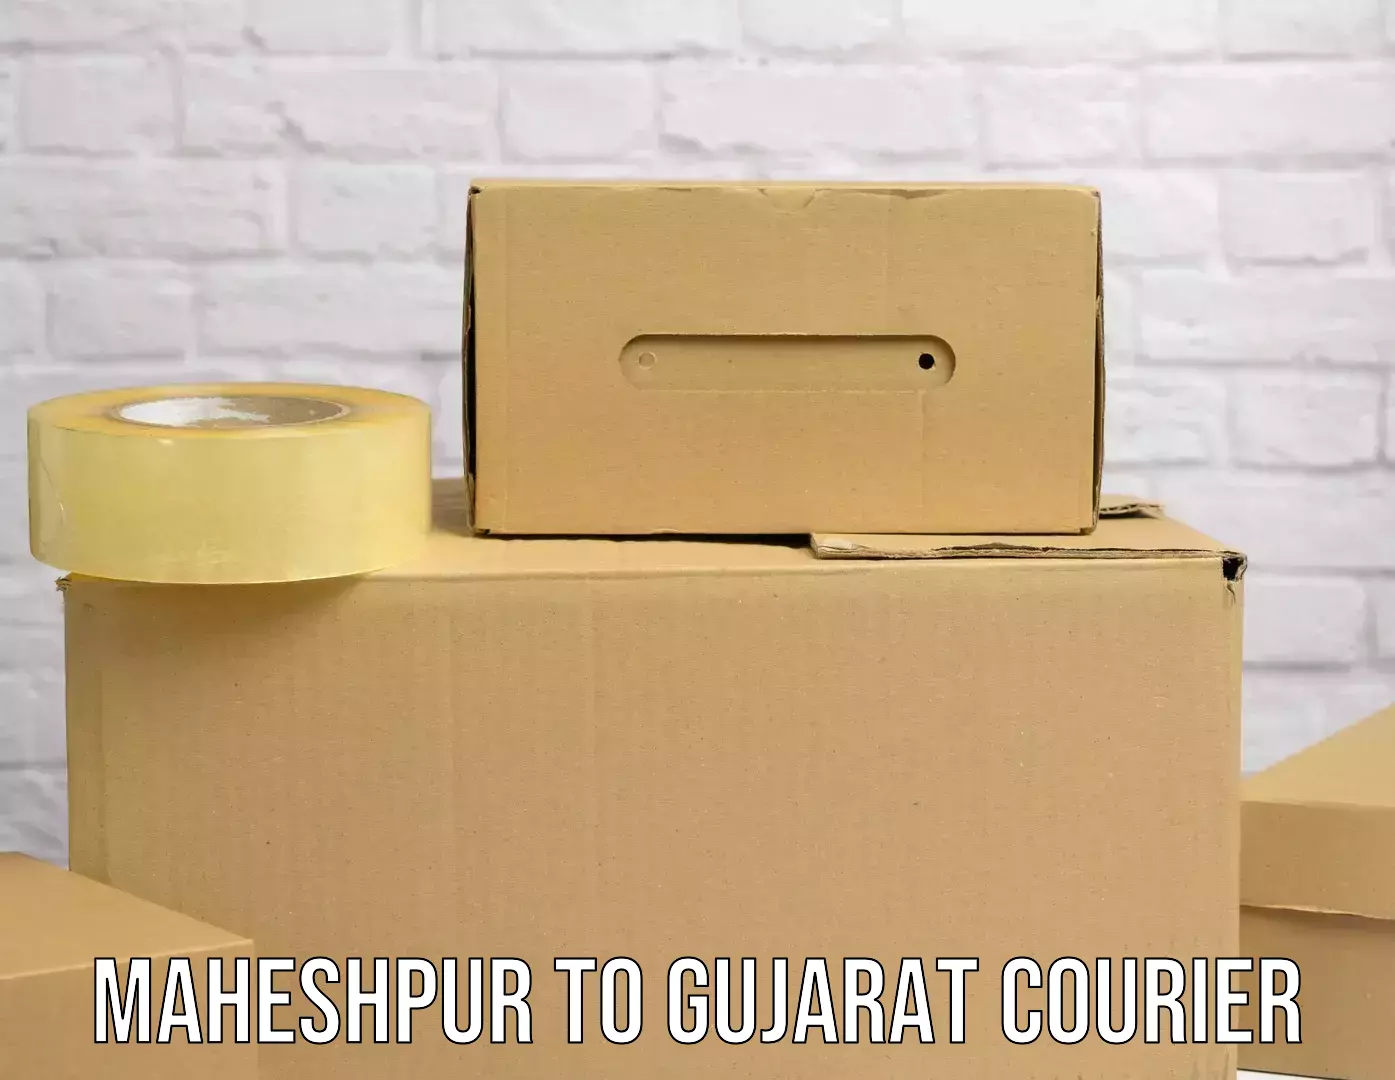 Versatile courier offerings Maheshpur to Ahmedabad